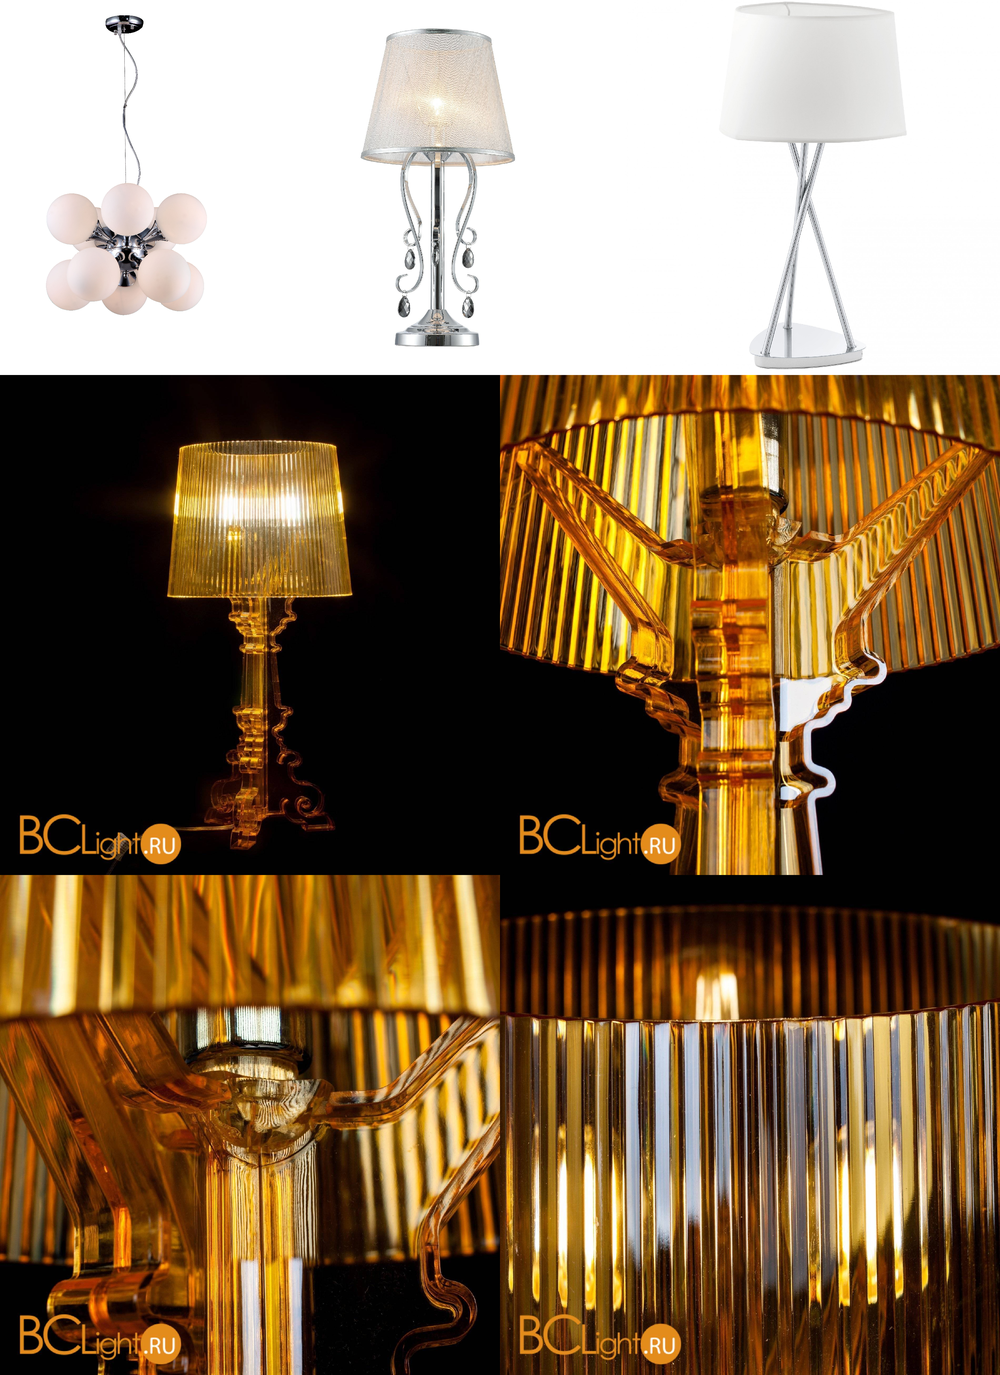 « интерьерные». Arte Lamp серия Trendy артикул A6010LT-1GO